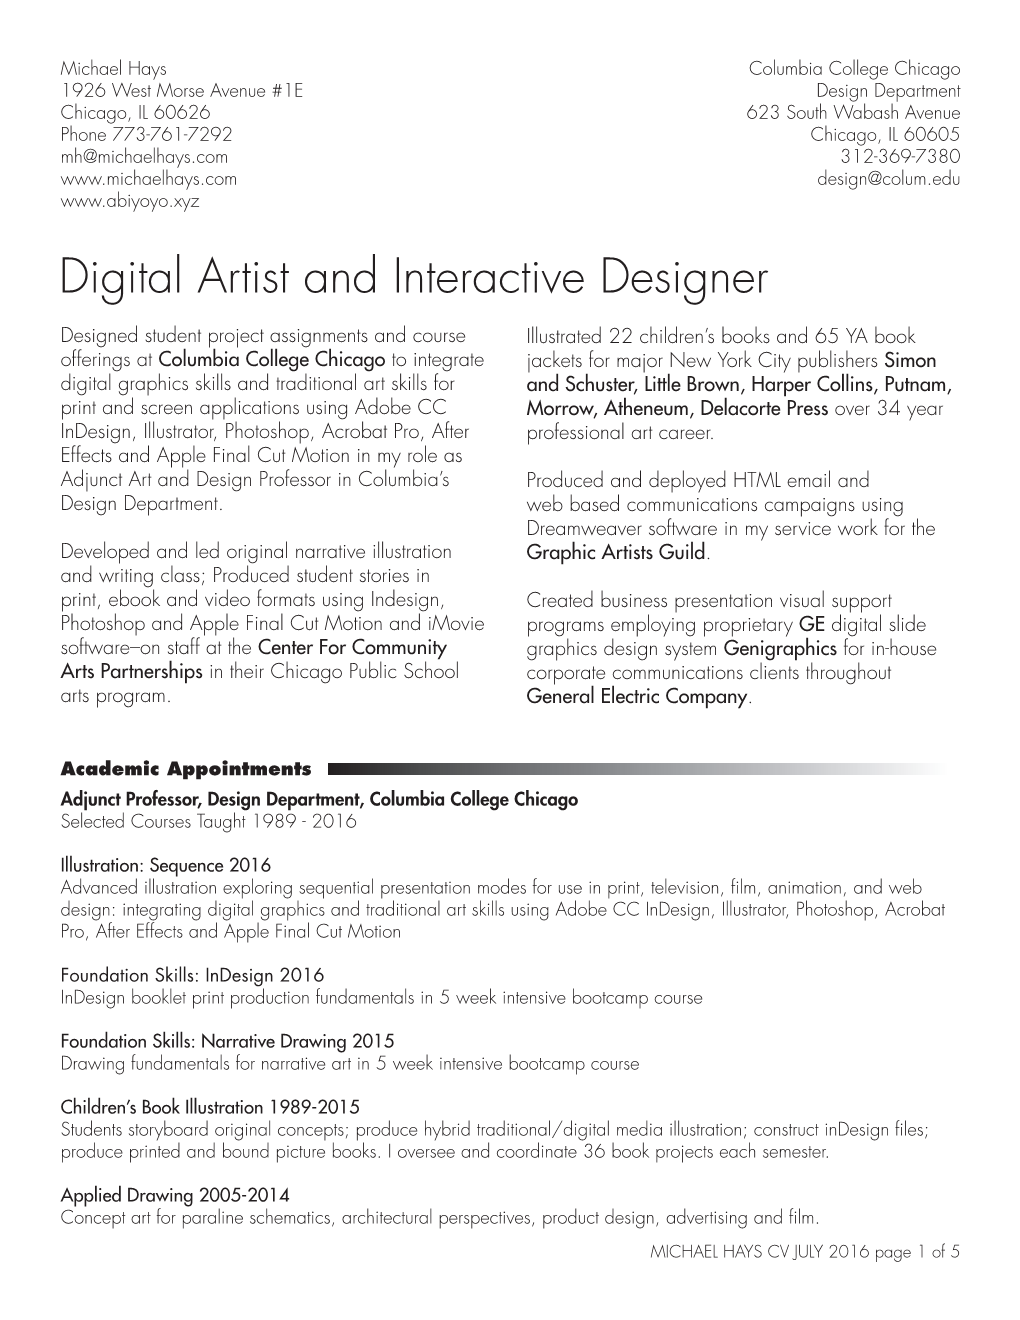 Digital Artist and Interactive Designer